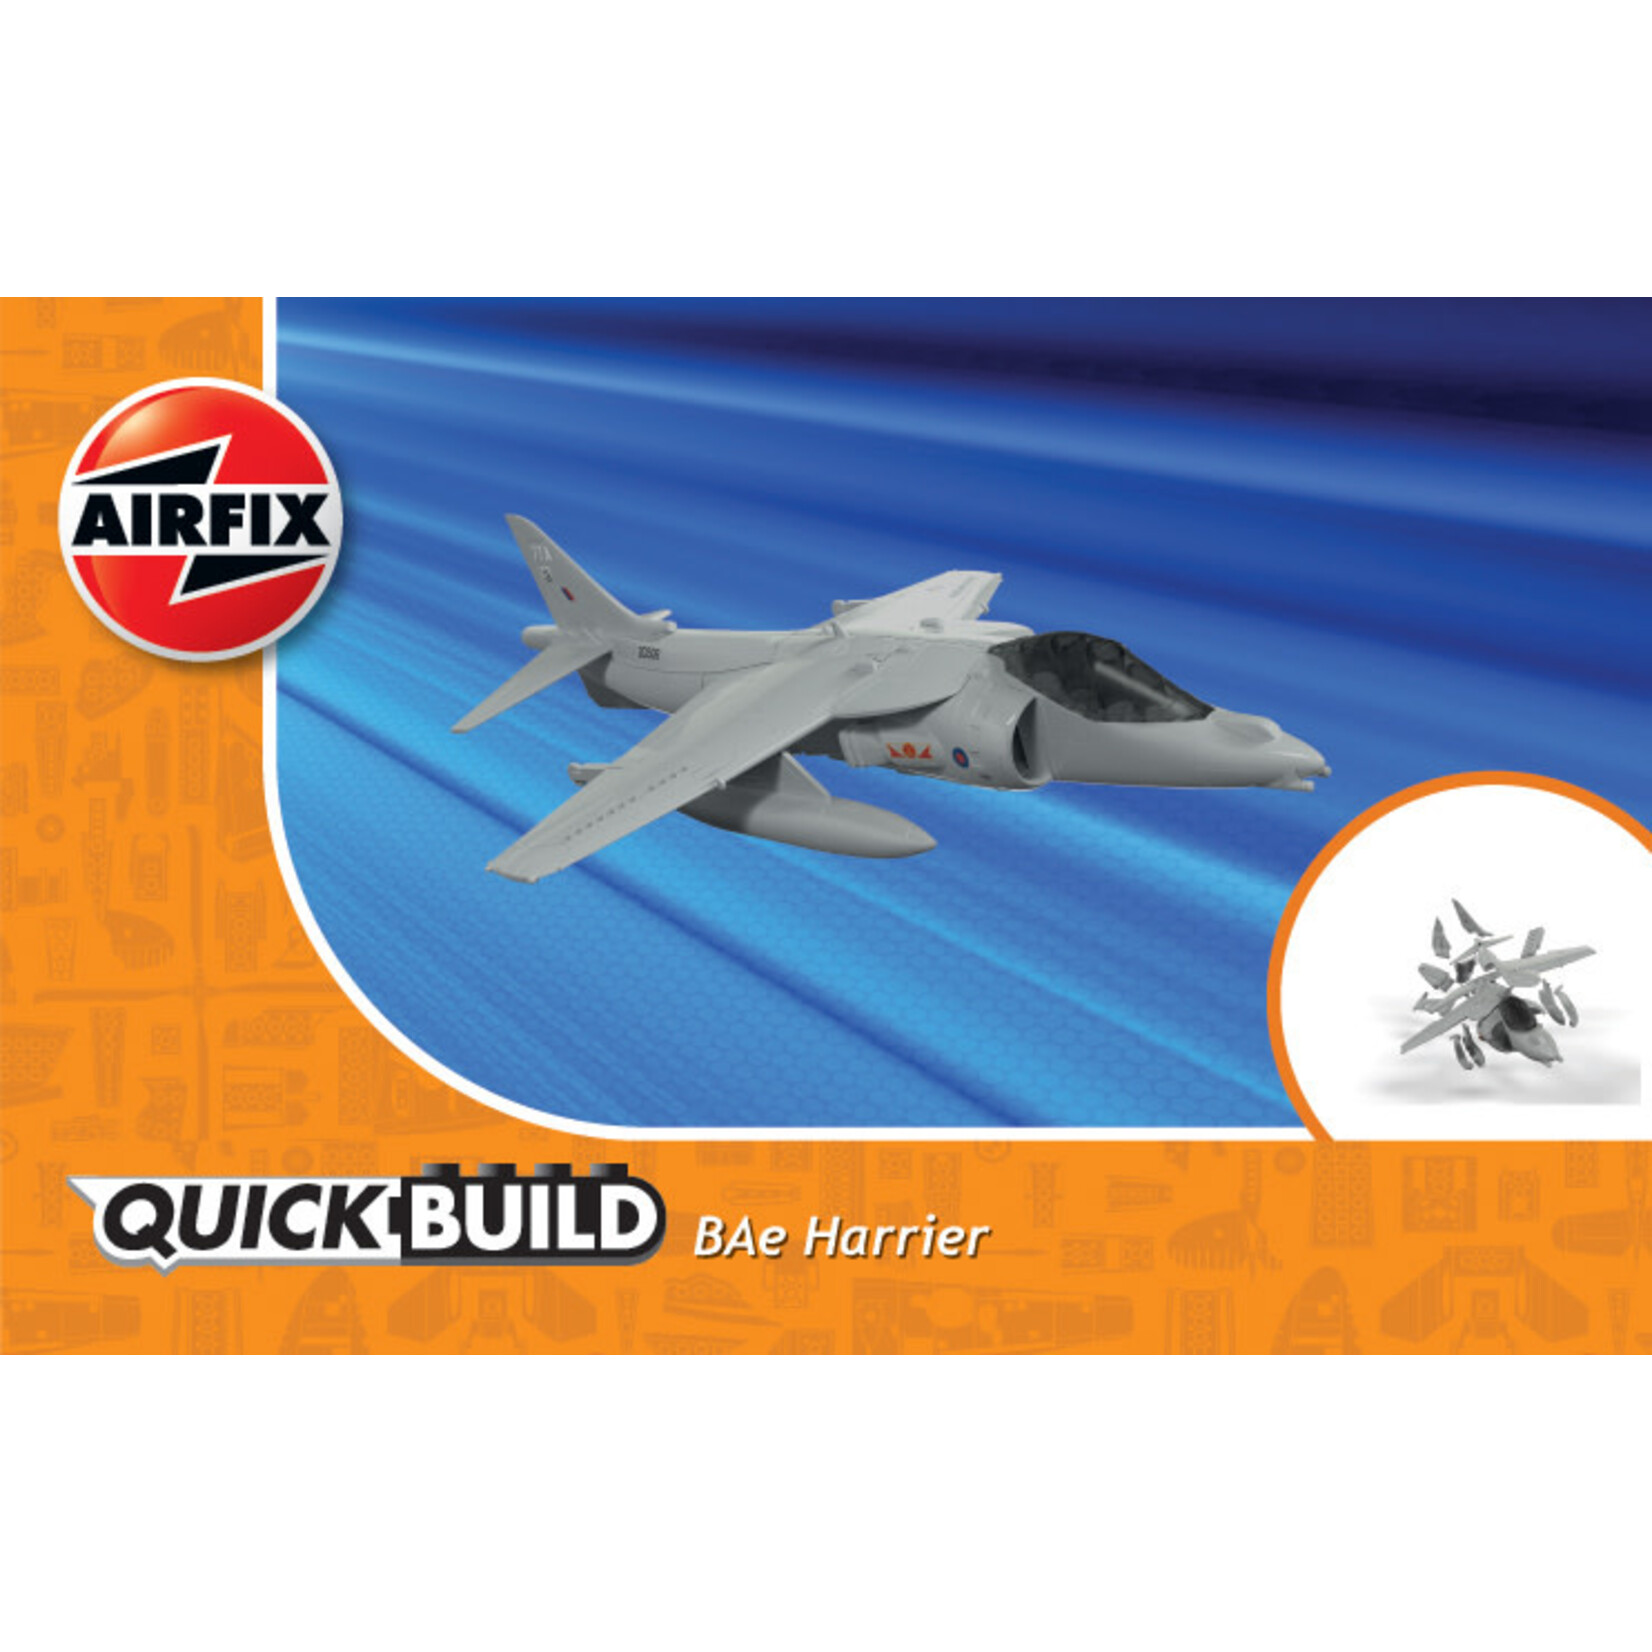 Airfix AIRJ6009 Harrier Quick Build